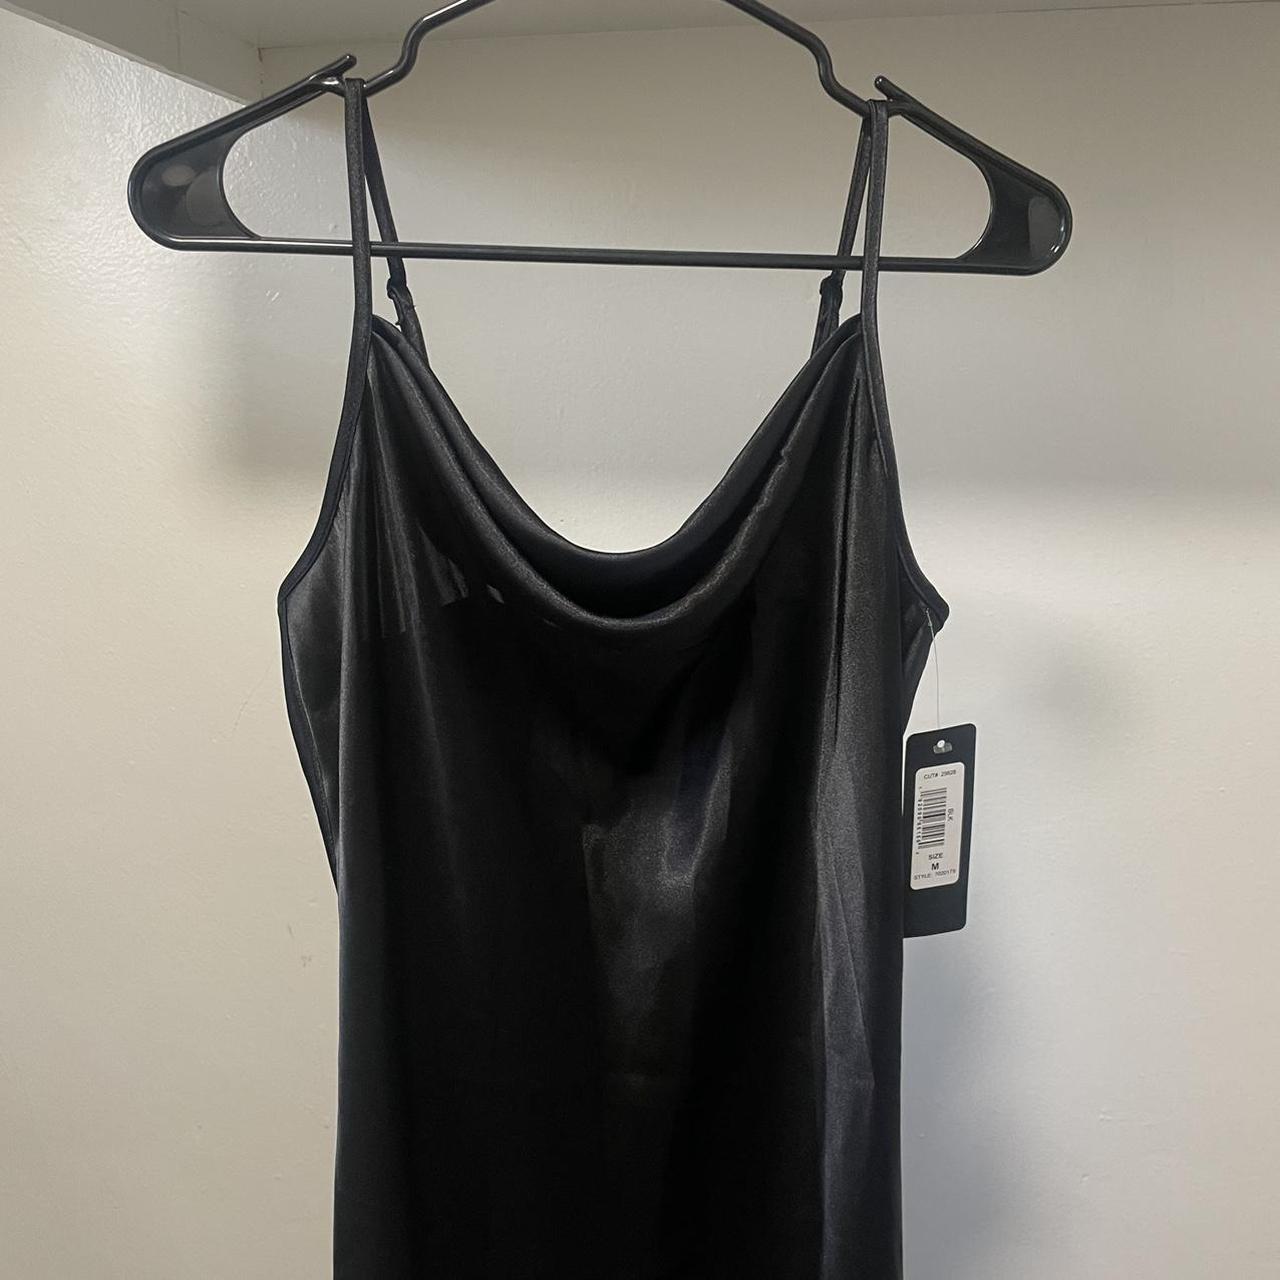 Product Image 2 - Bebe black satin dress. Spaghetti